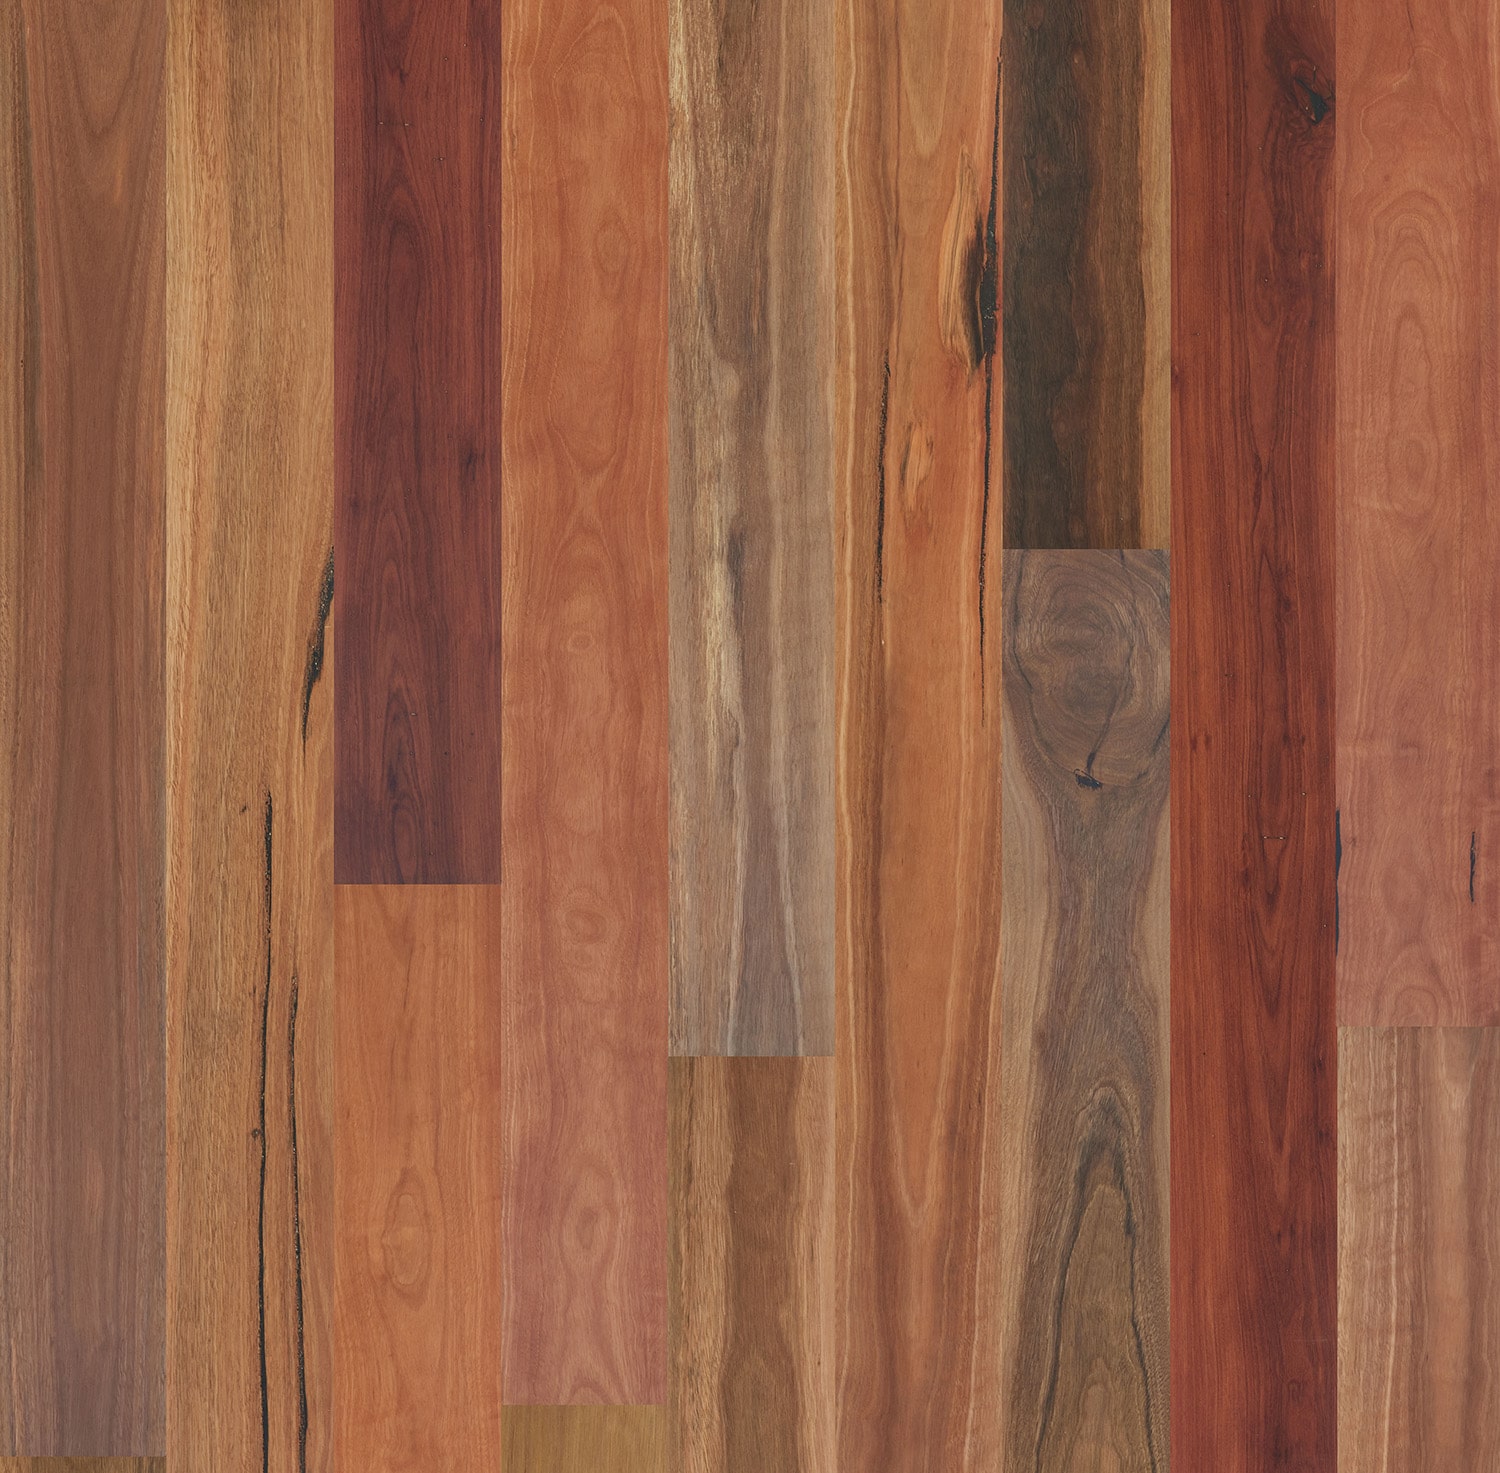 Eucalypt European Oak Flooring in Spotted Gum – Rustic